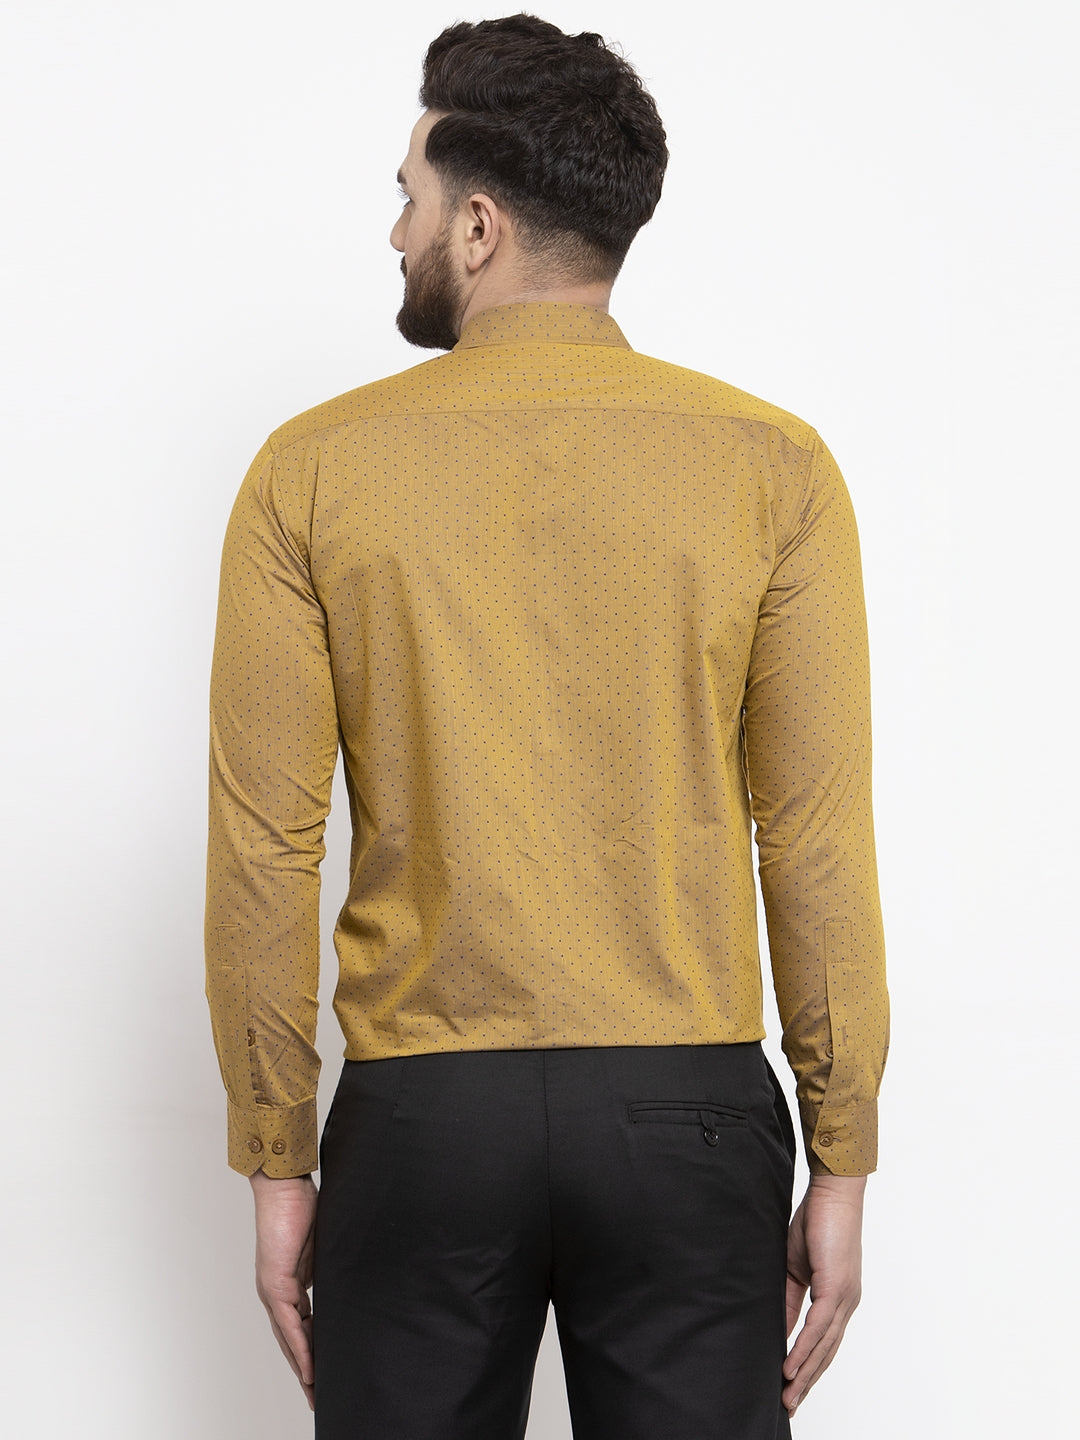 Men's Yellow Cotton Polka Dots Formal Shirts ( SF 739Mustard ) - Jainish